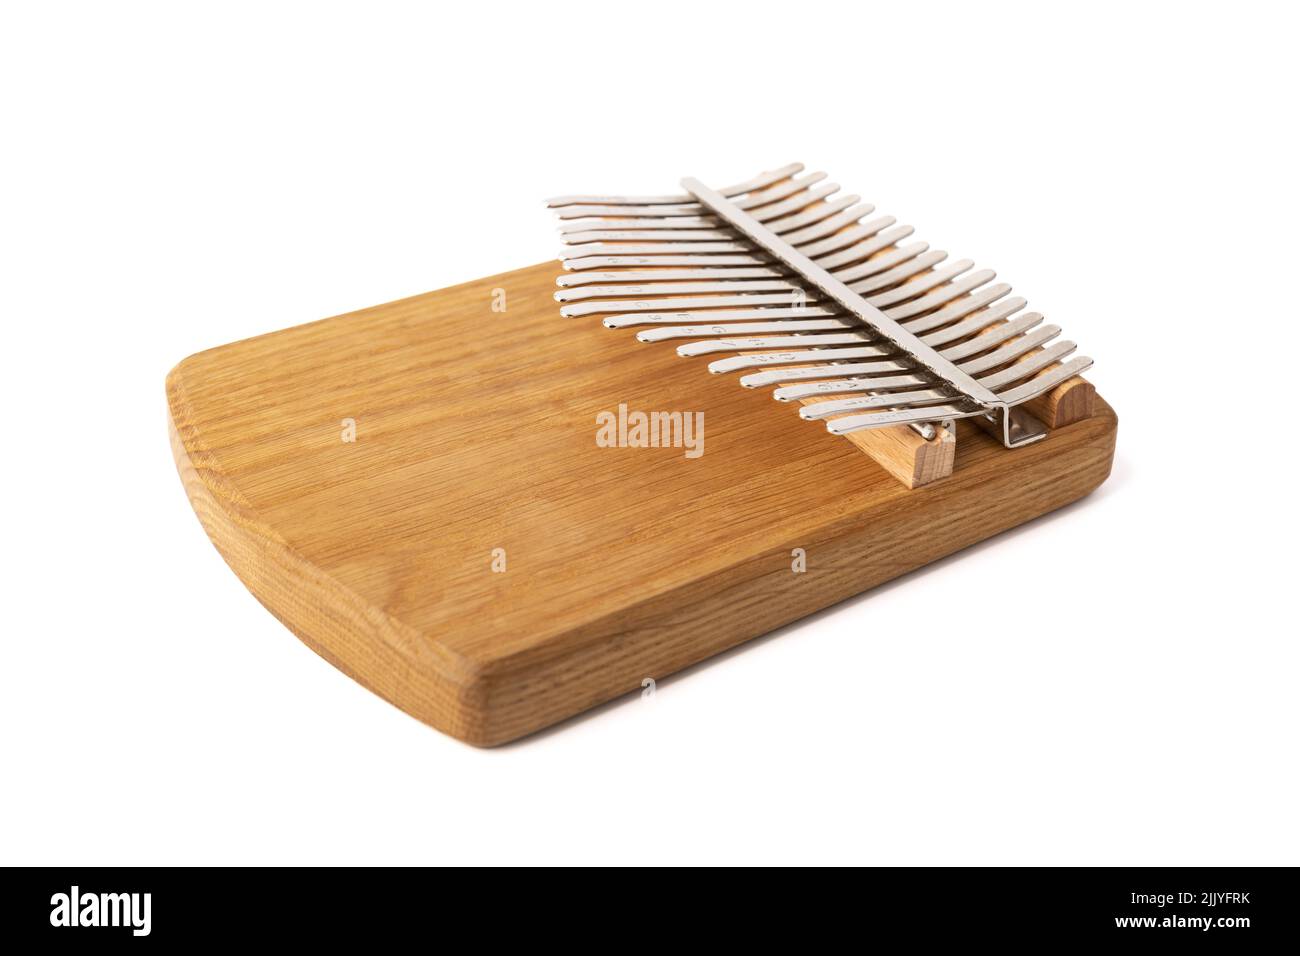 Instrumento musical africano Kalimba o Mbira hecho de madera y metal aislado sobre fondo blanco Foto de stock